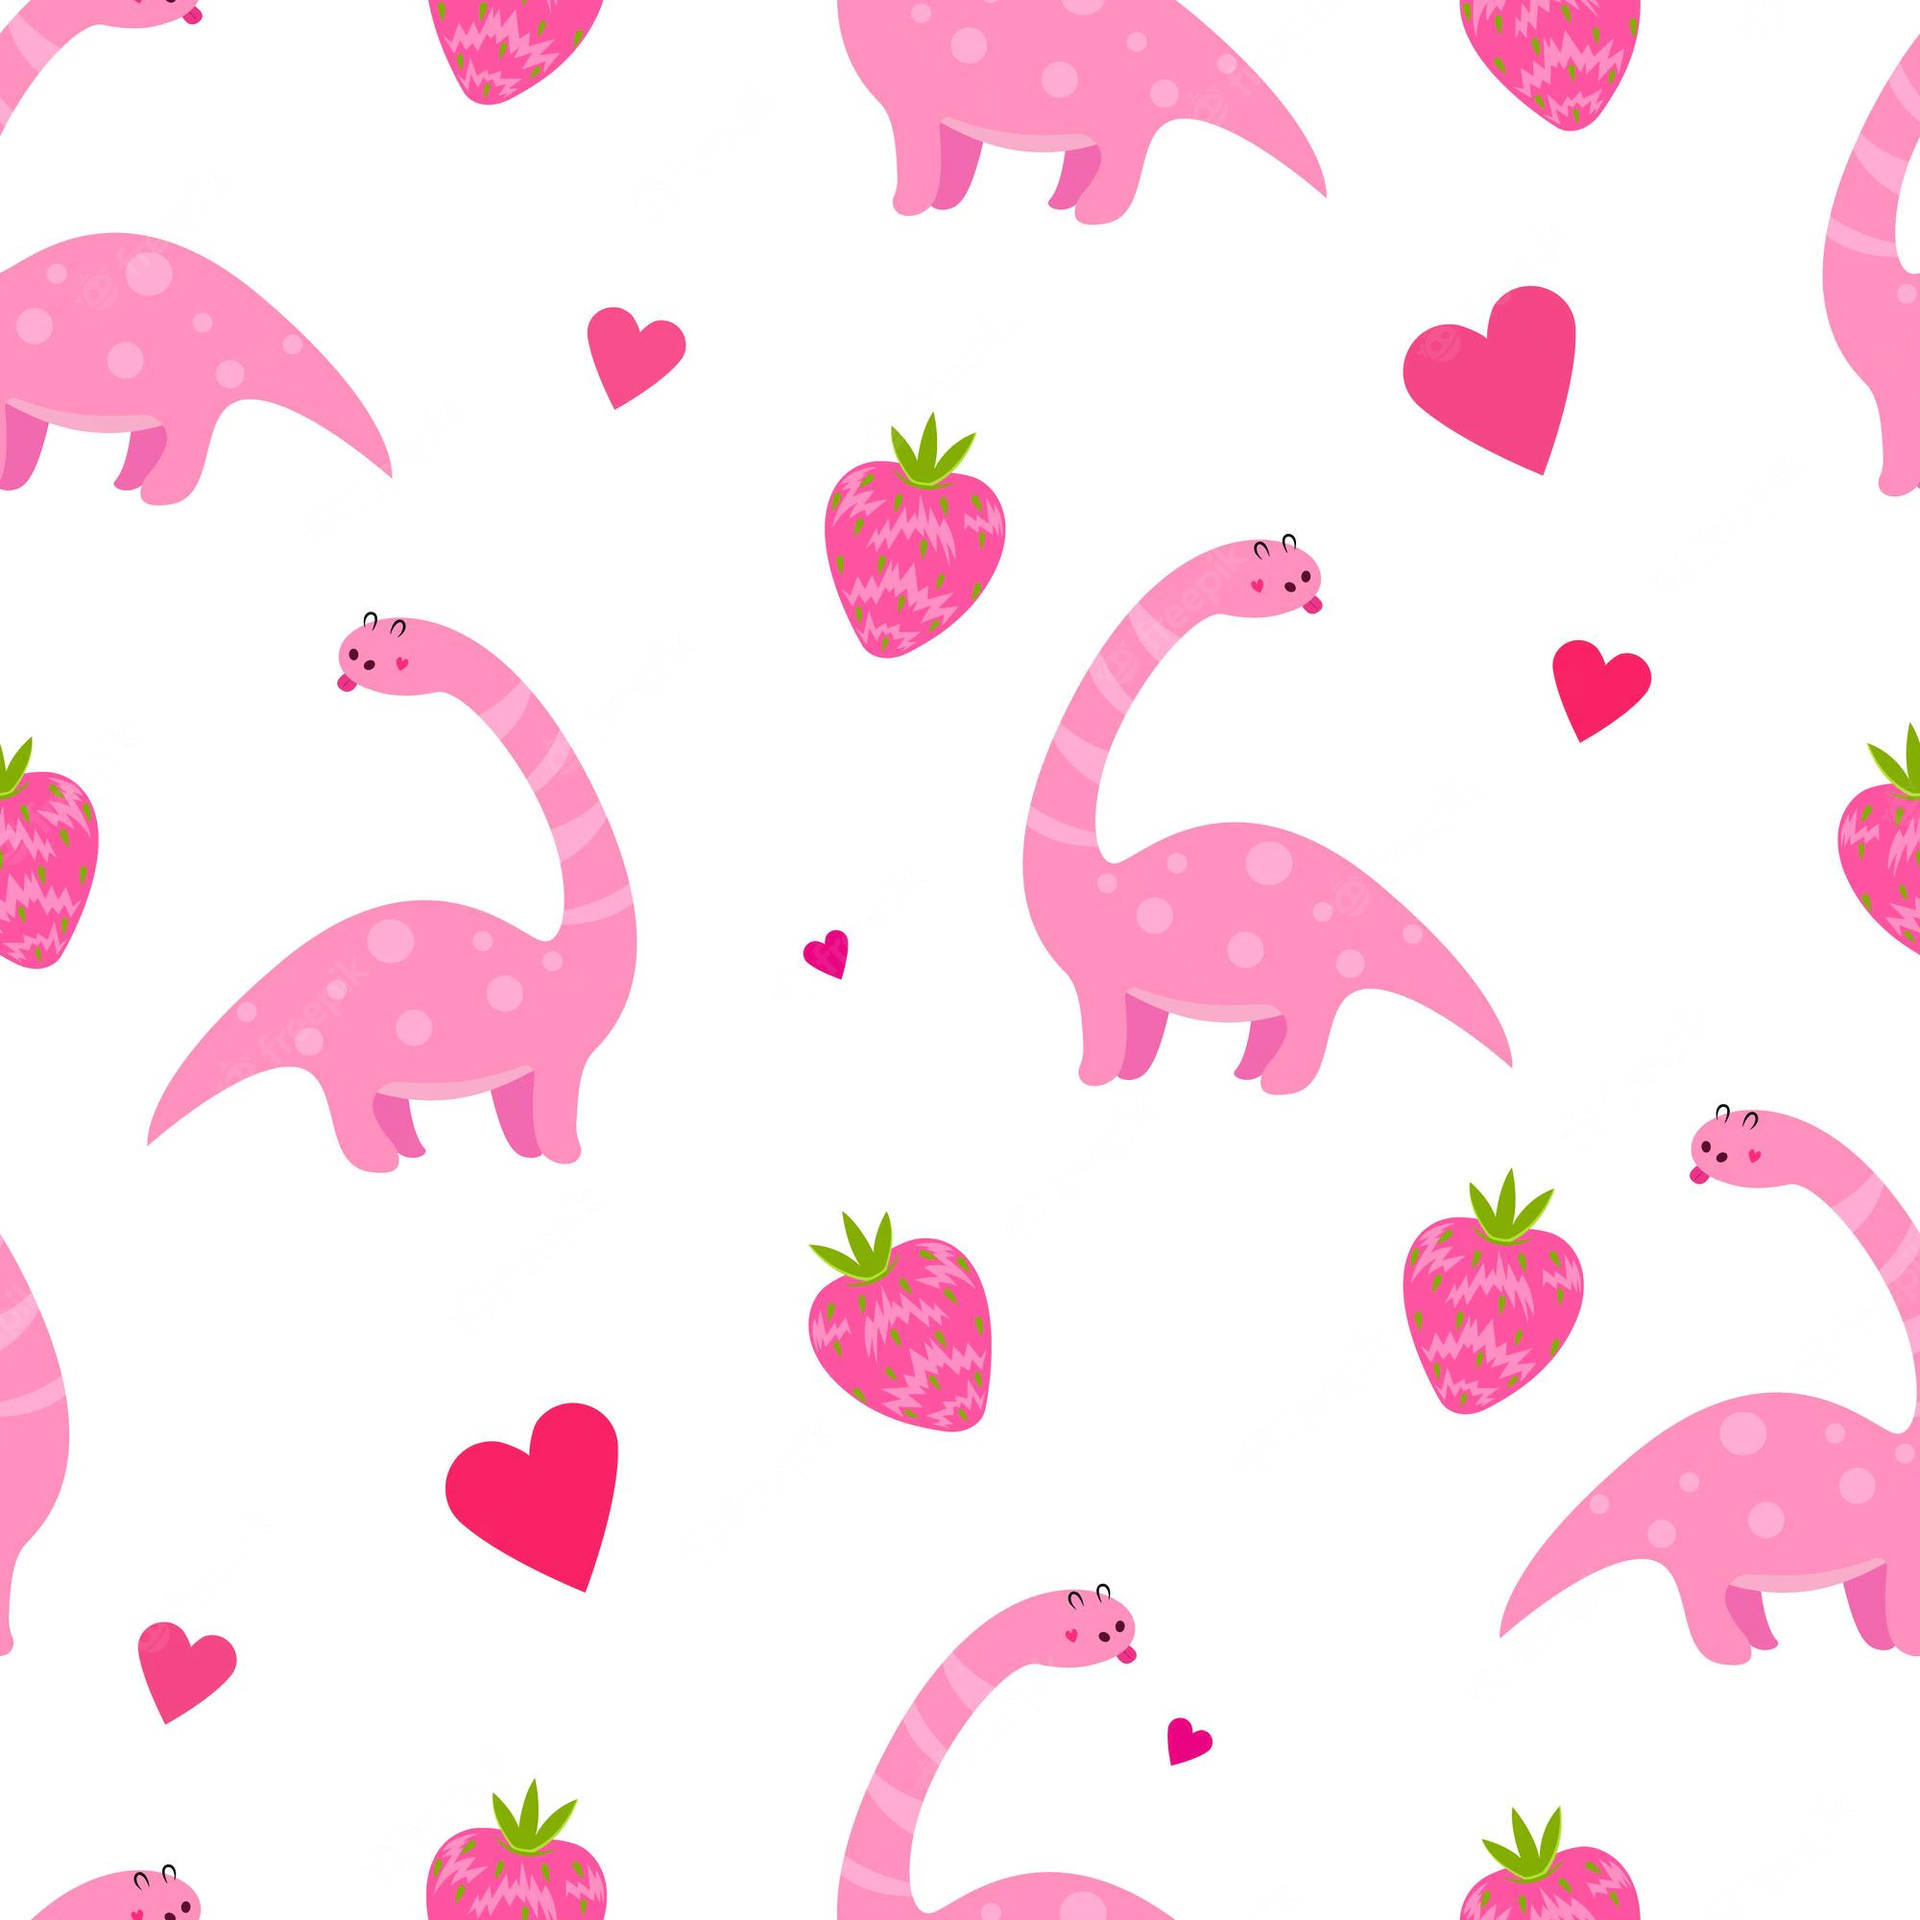 A fun and cute dinosaur pattern! Wallpaper